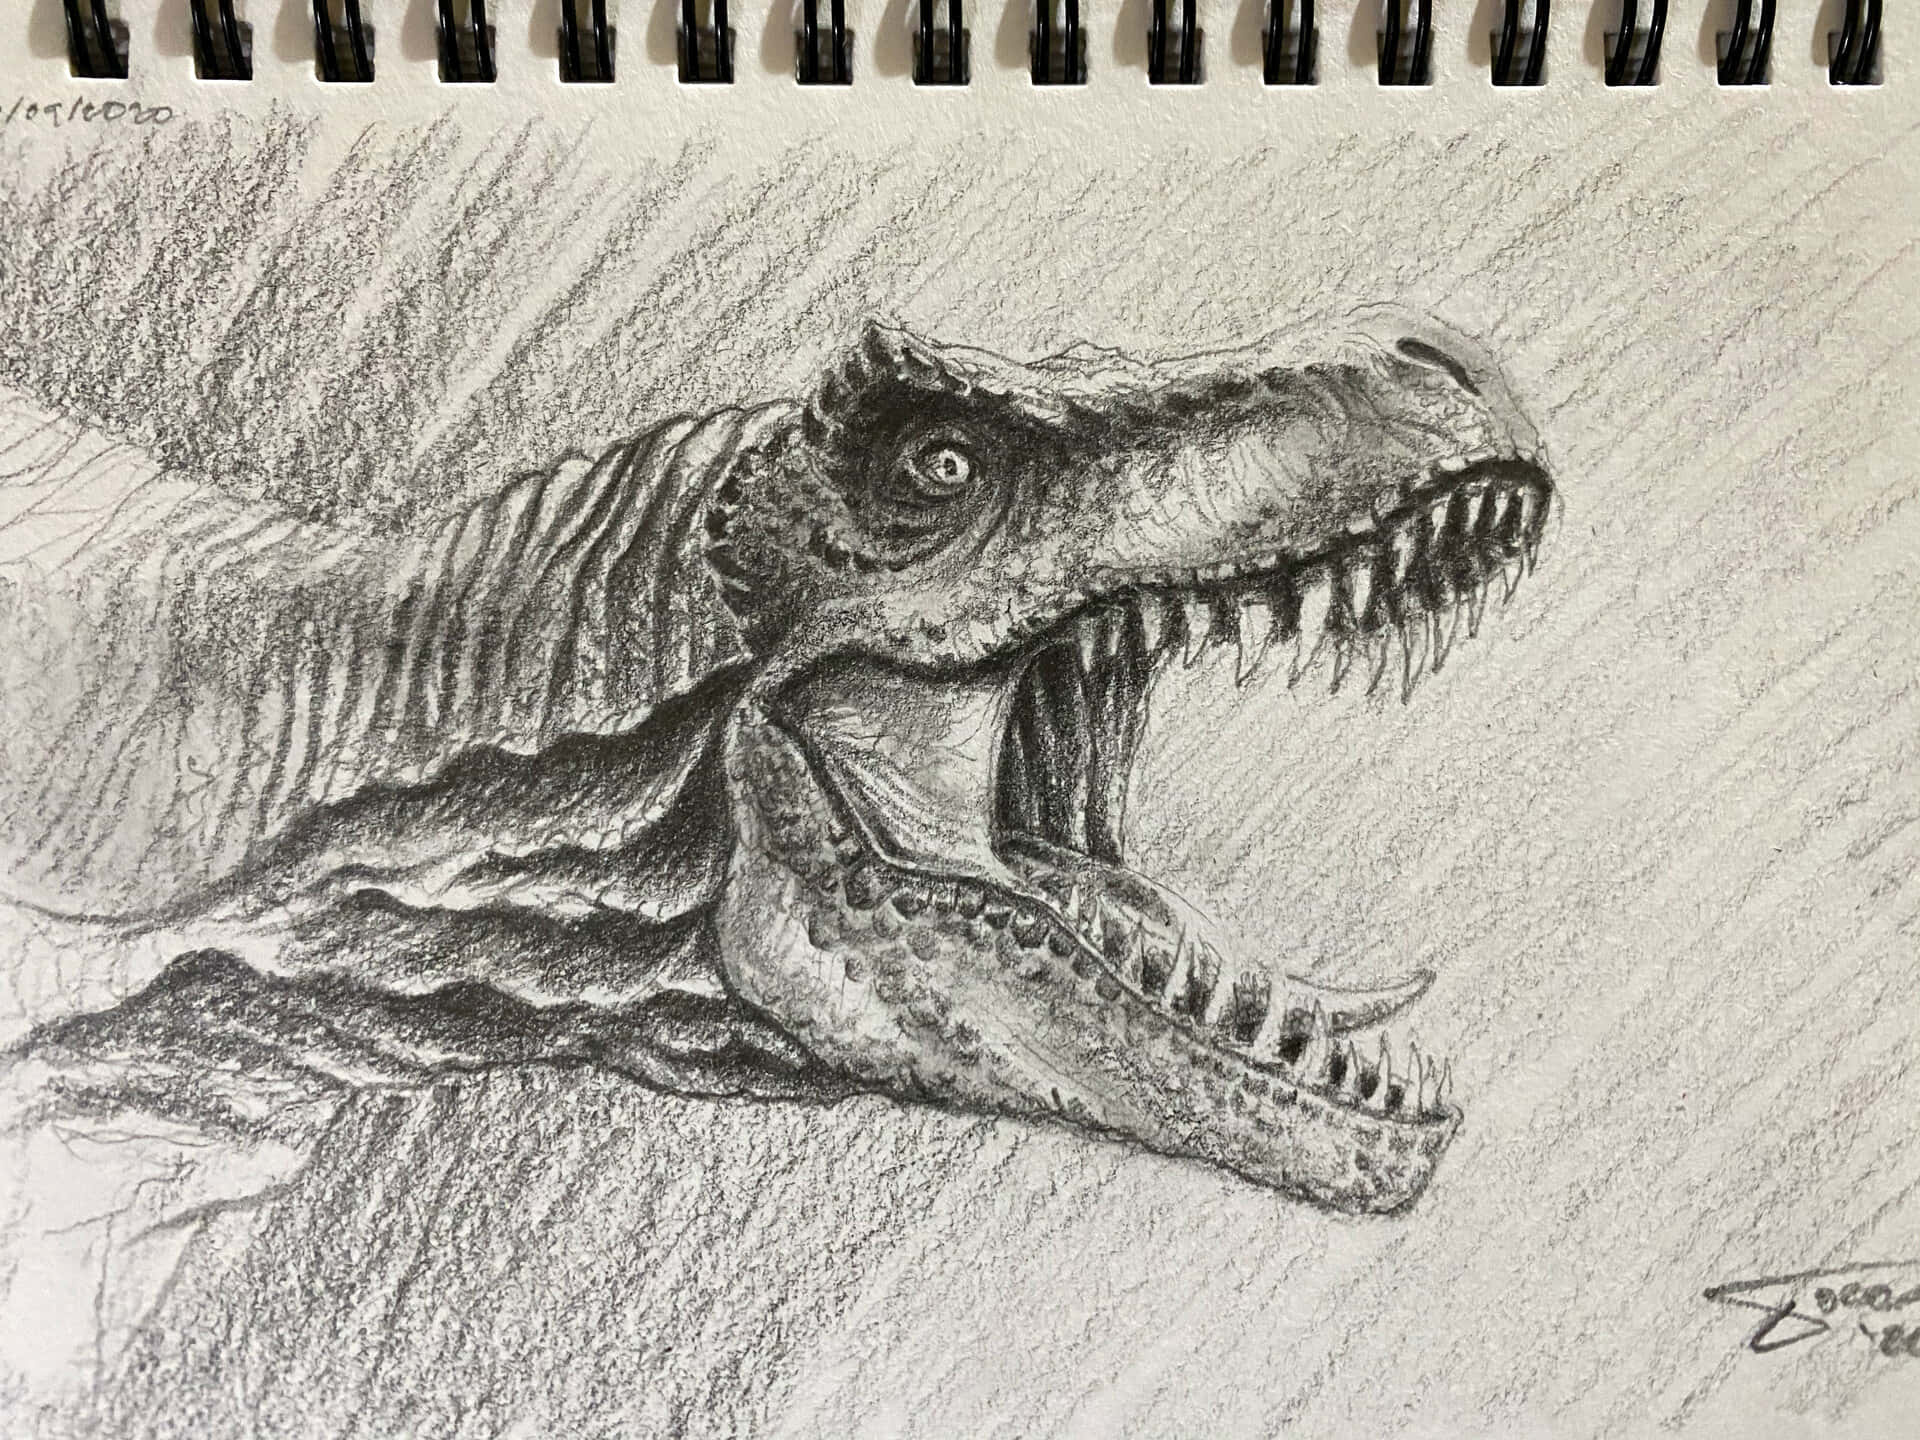 A cartoon drawing of a dinosaur